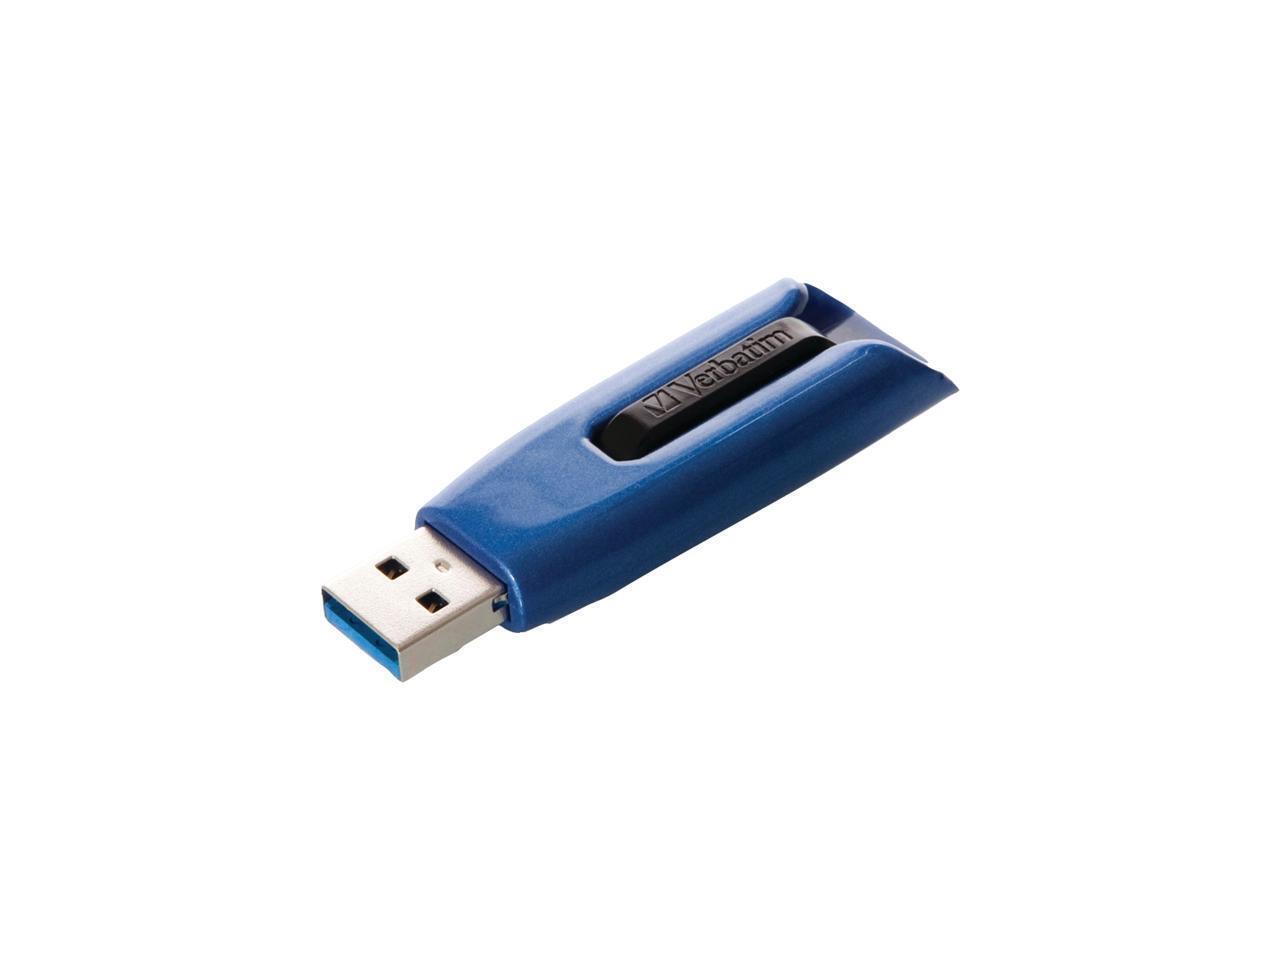 Verbatim V3 Max Dual Channel USB 3.0 Drive